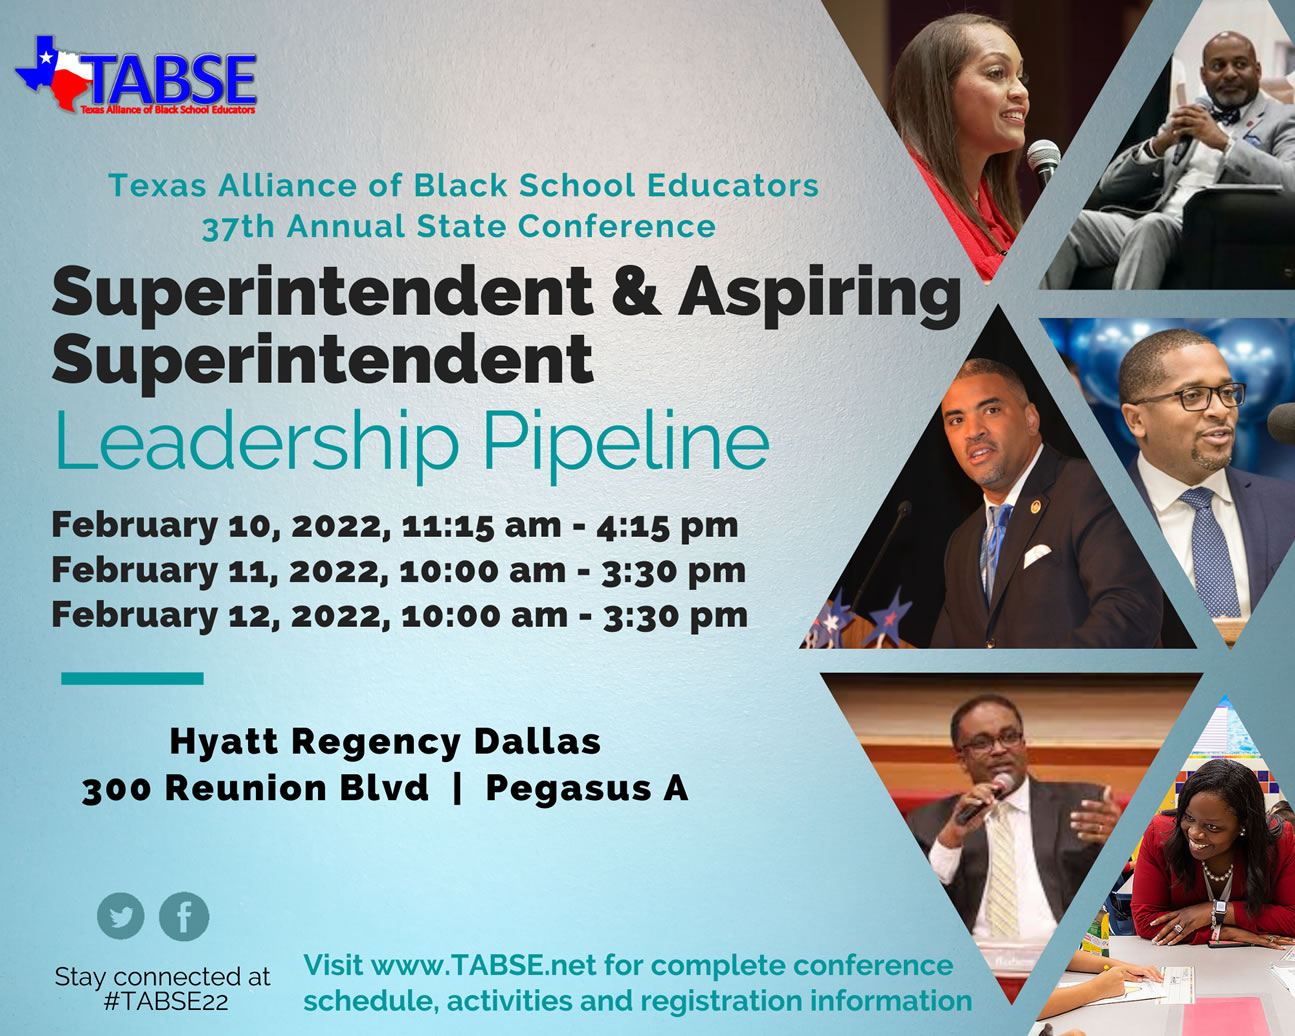 Superintendent & Aspiring Superintendent Pipeline 2022